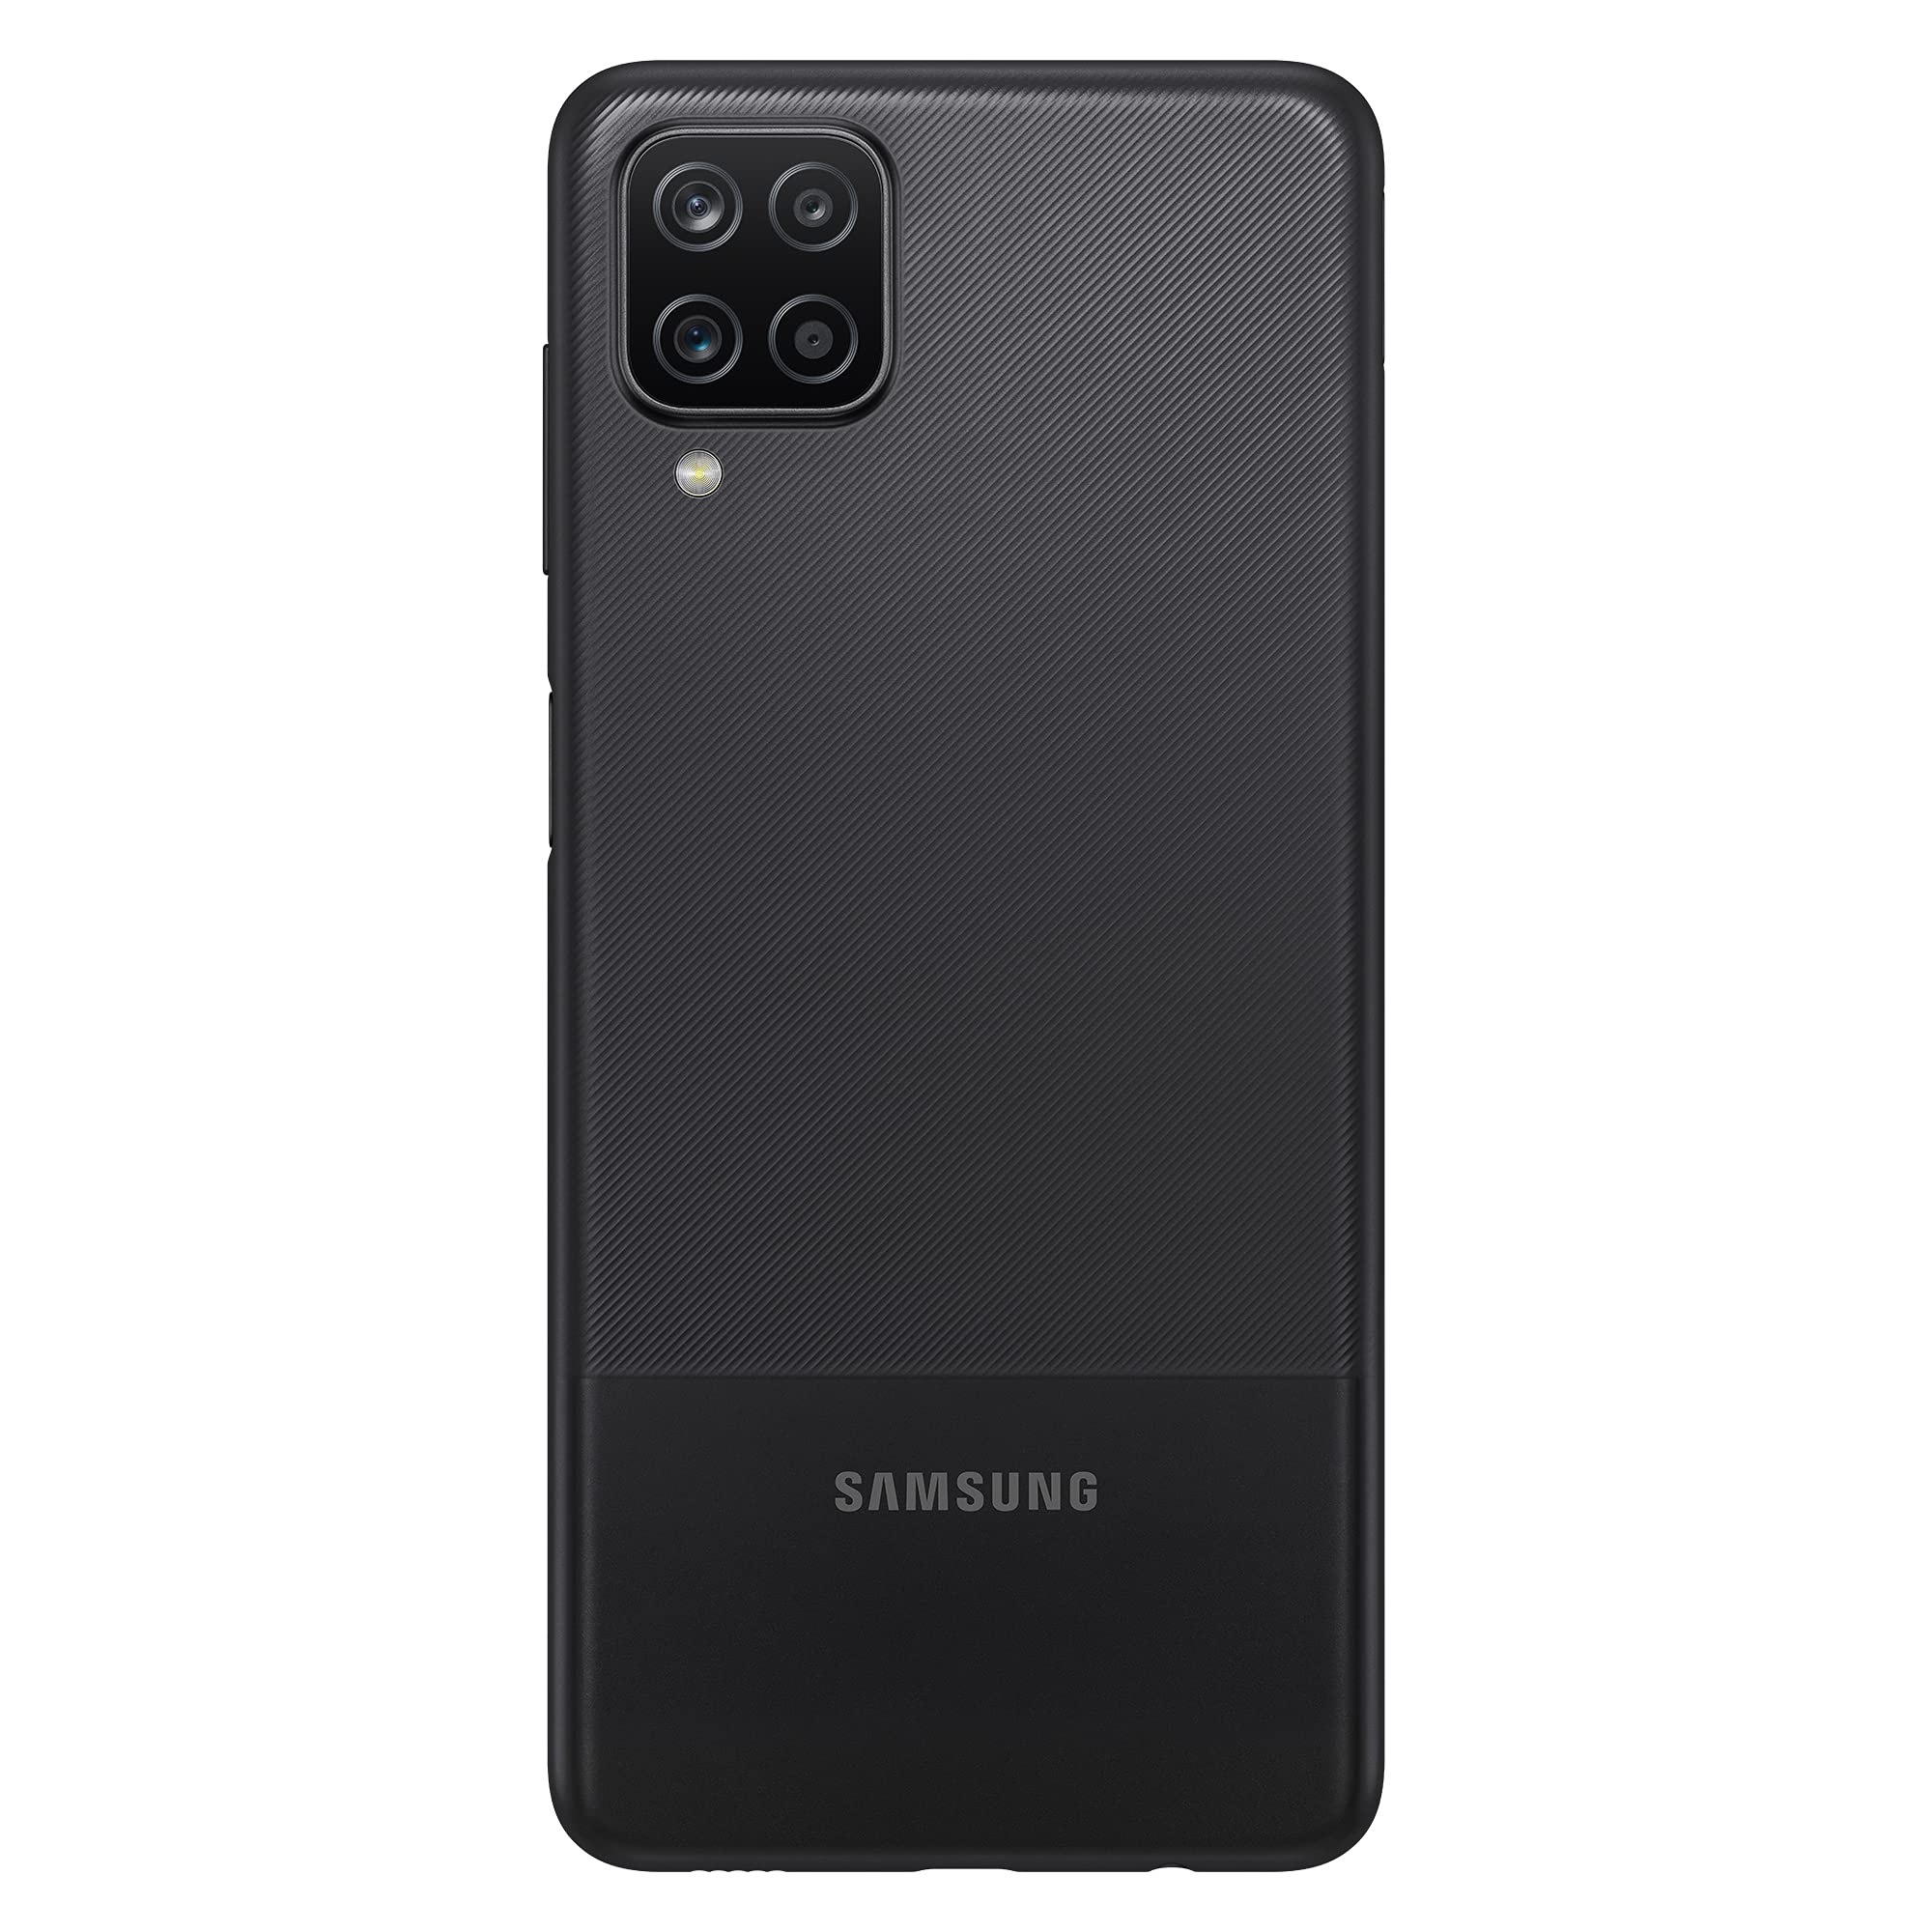 Tracfone Samsung Galaxy A12, 32GB, Black - Prepaid Smartphone (Locked)